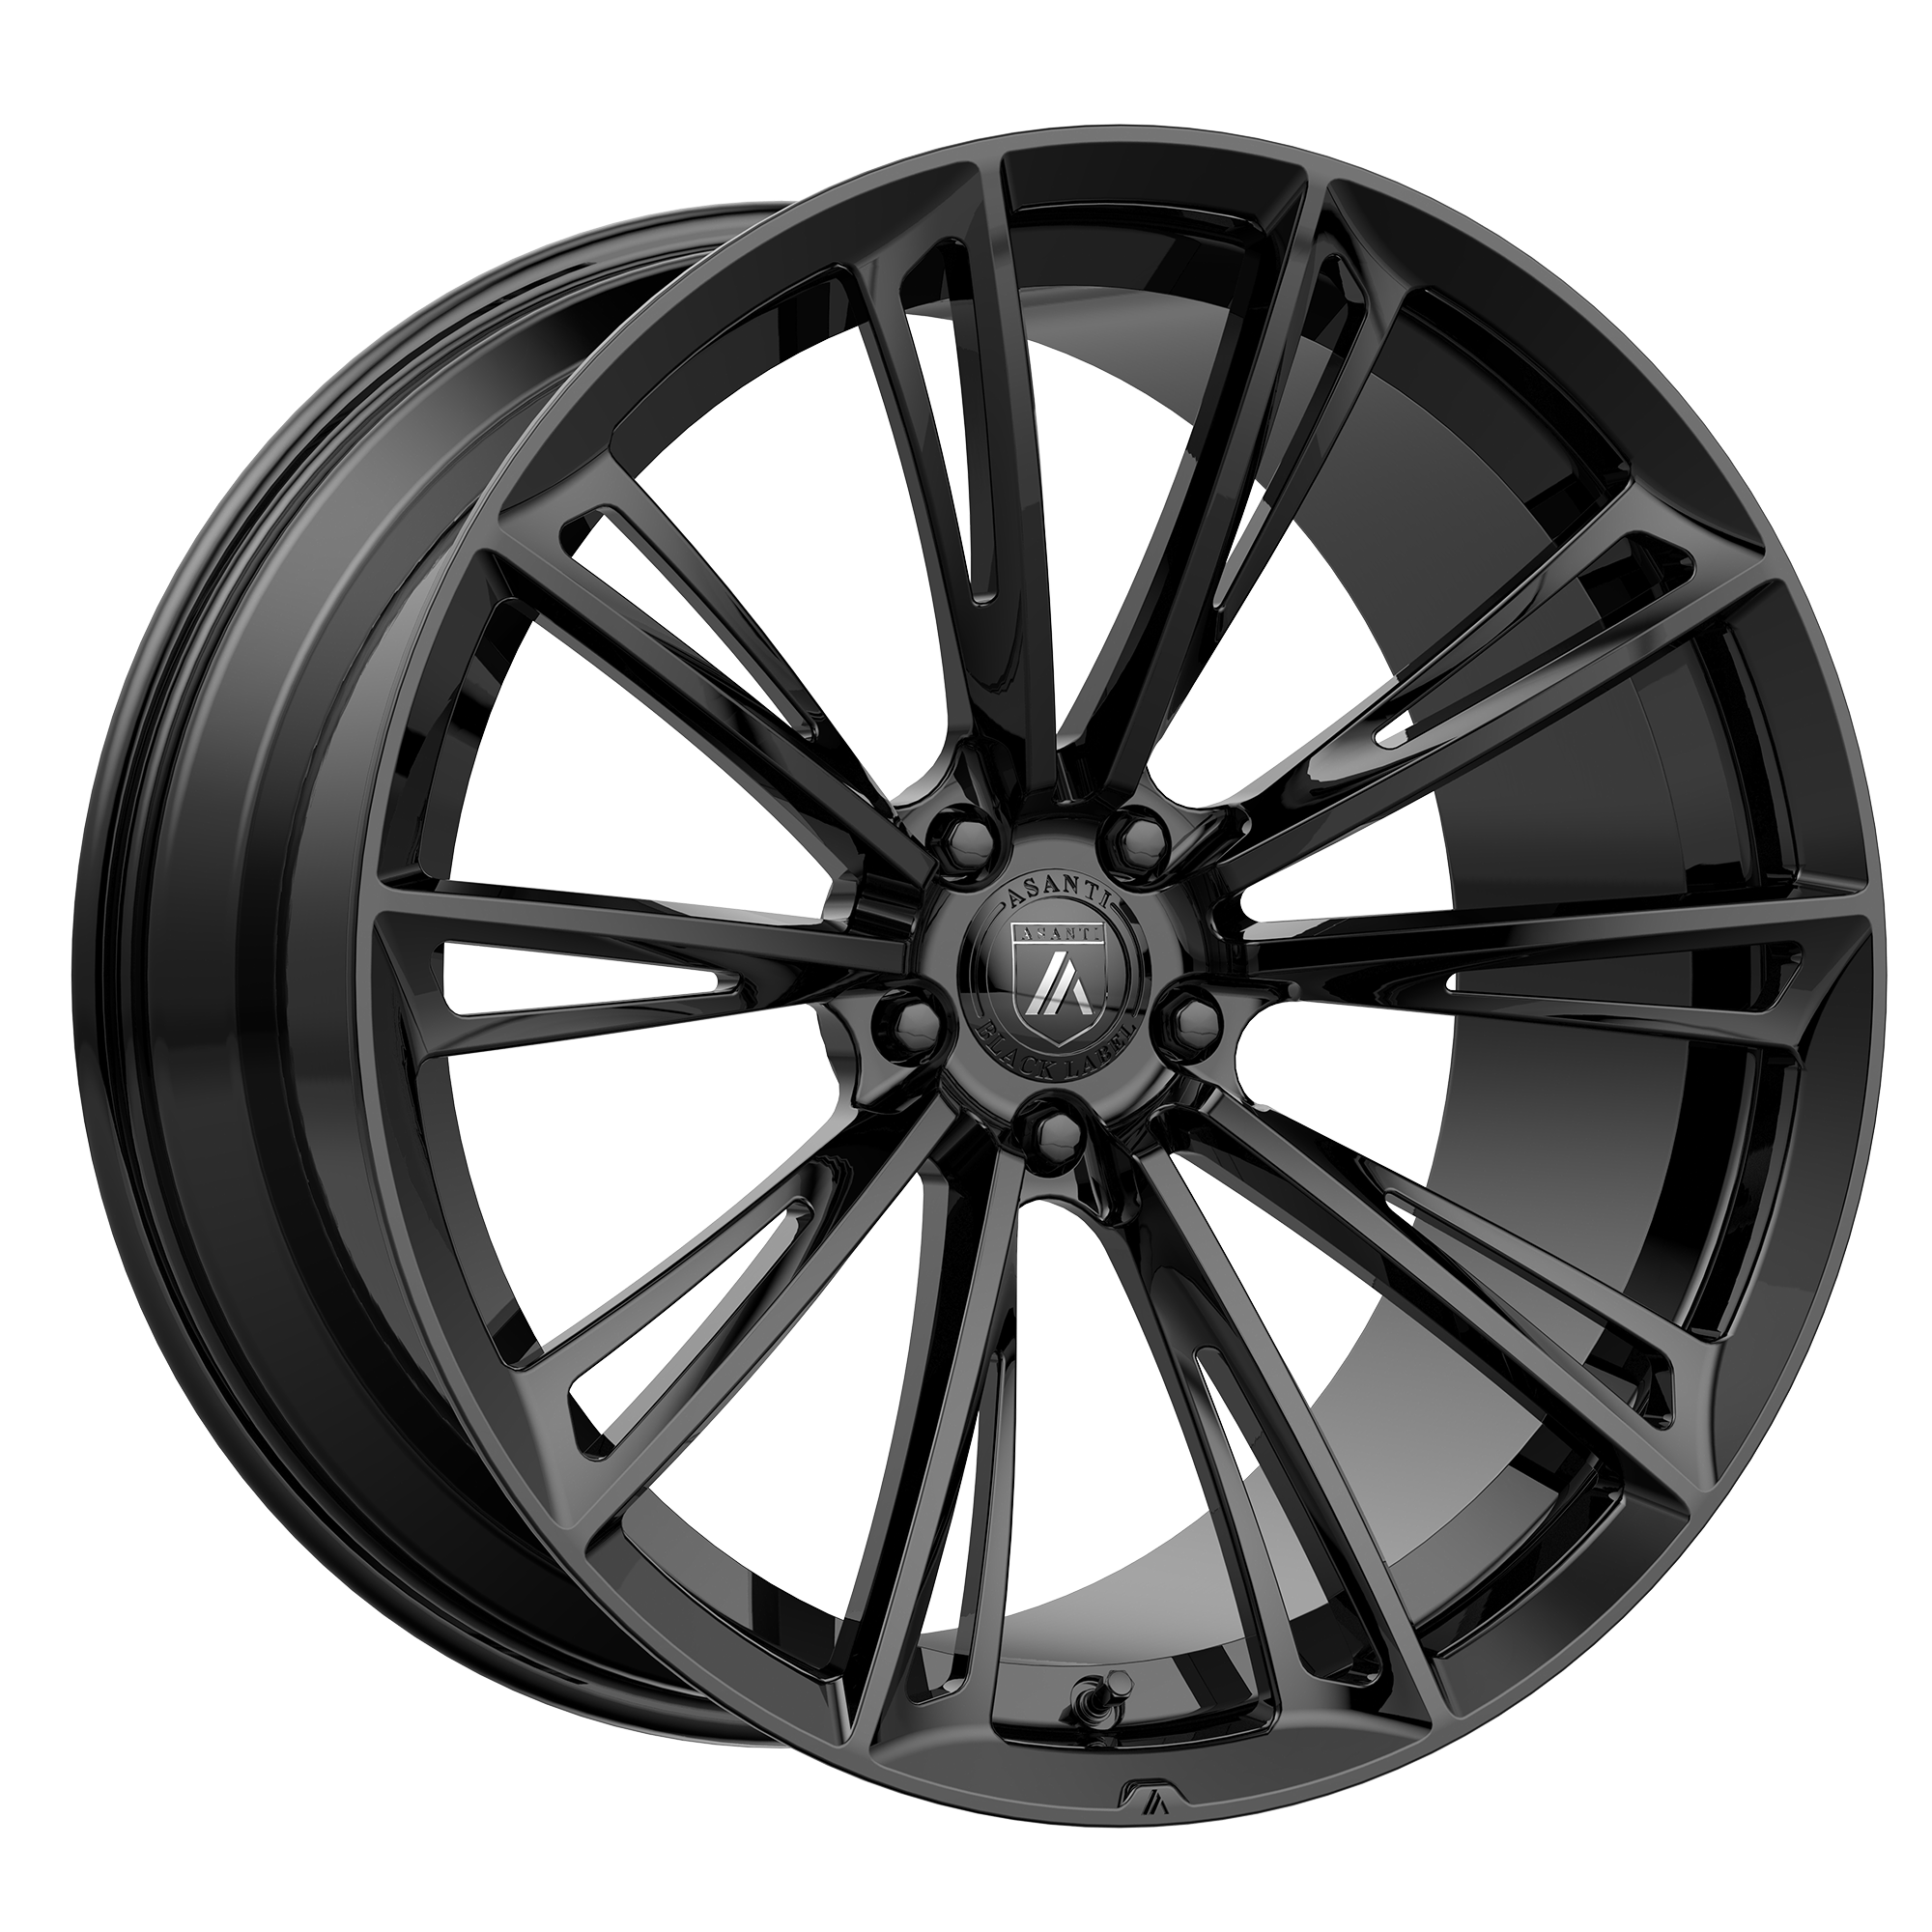 CORONA 20x10.5 5x115.00 GLOSS BLACK (20 mm) - Tires and Engine Performance